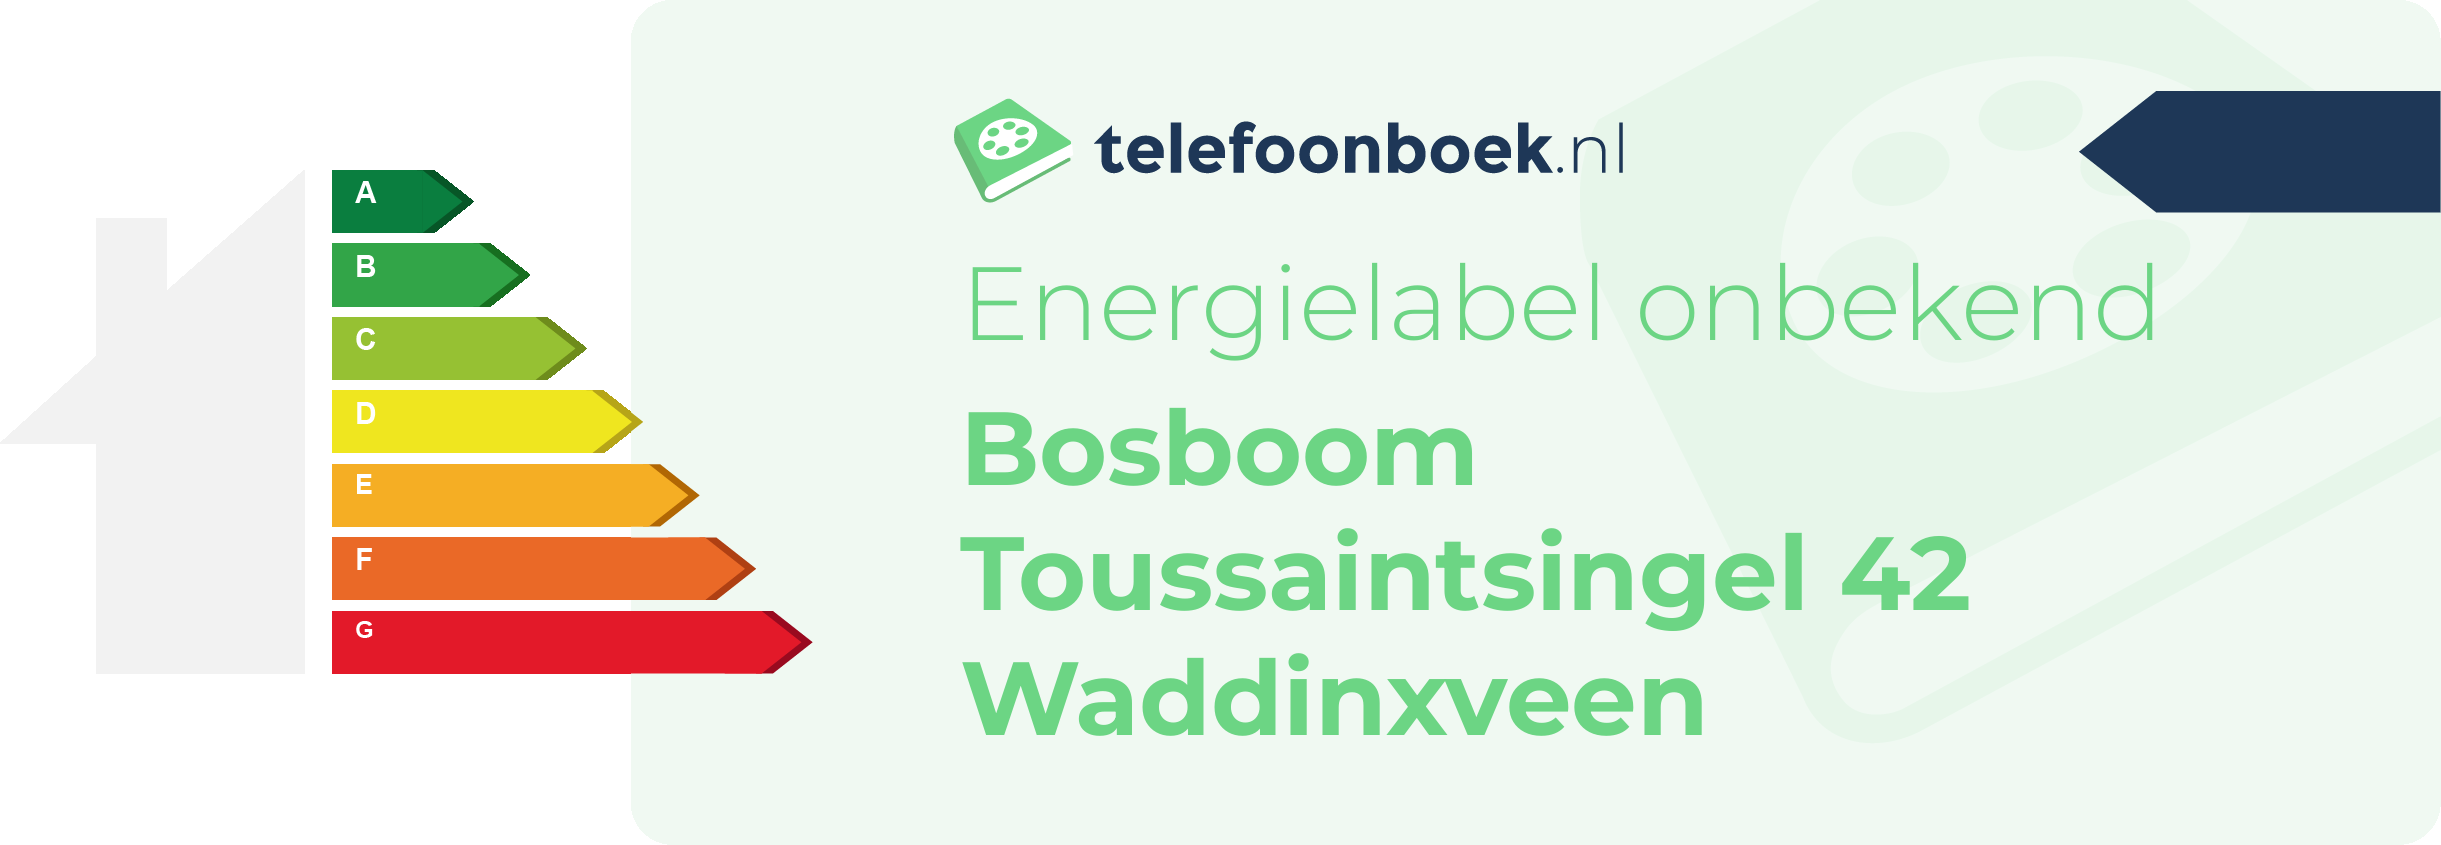 Energielabel Bosboom Toussaintsingel 42 Waddinxveen